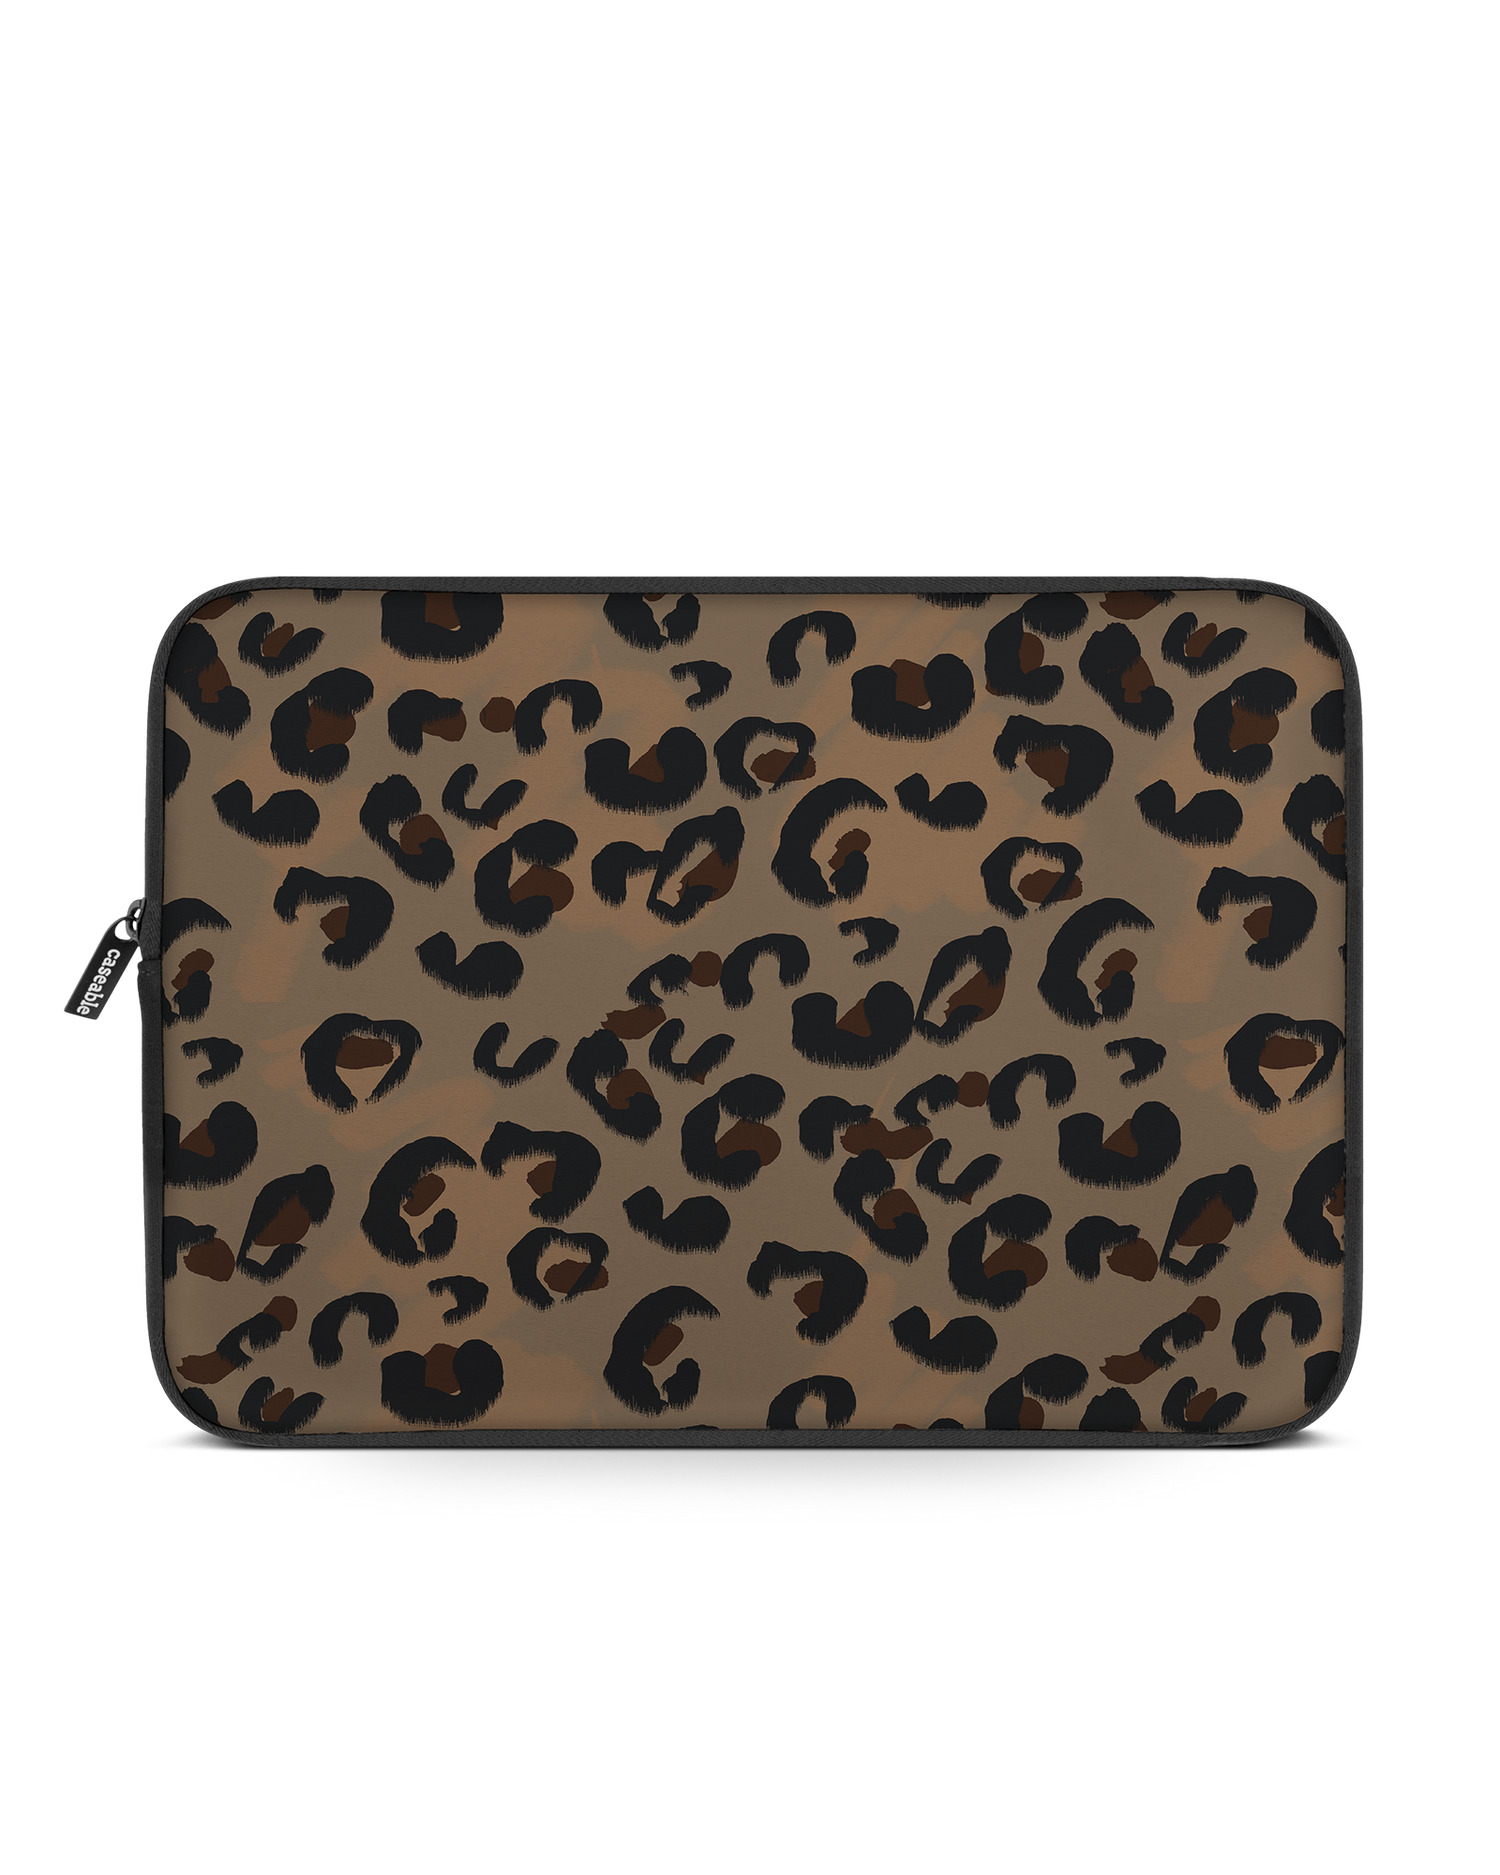 Leopard Repeat Laptop Case 16 inch: Front View